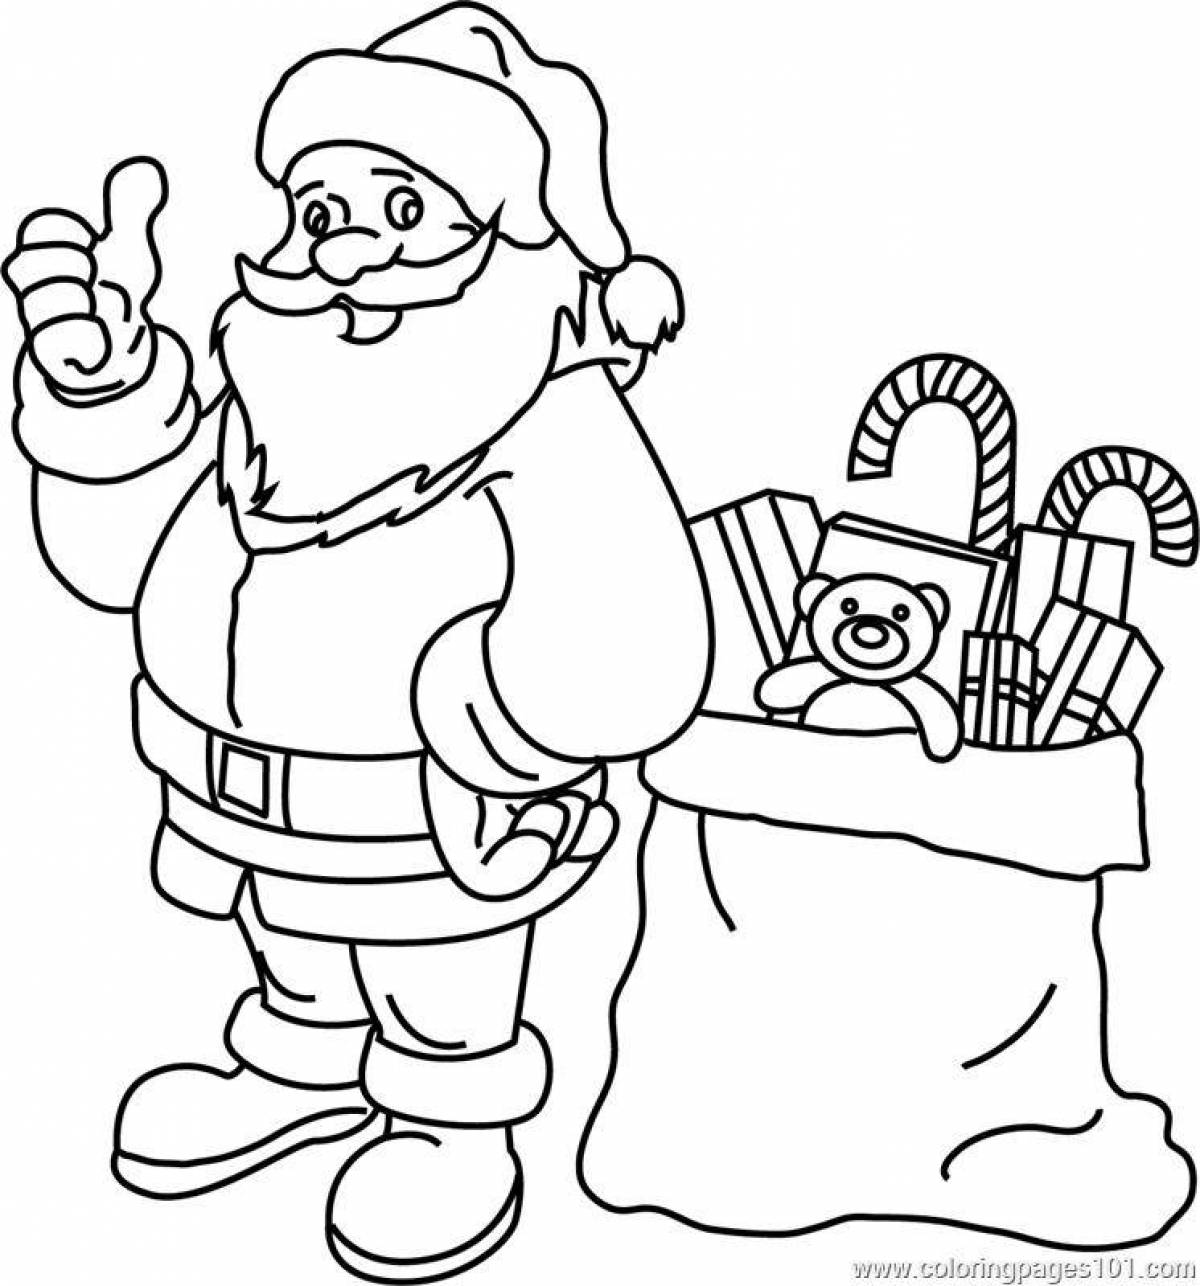 Coloring page happy santa claus with a bag